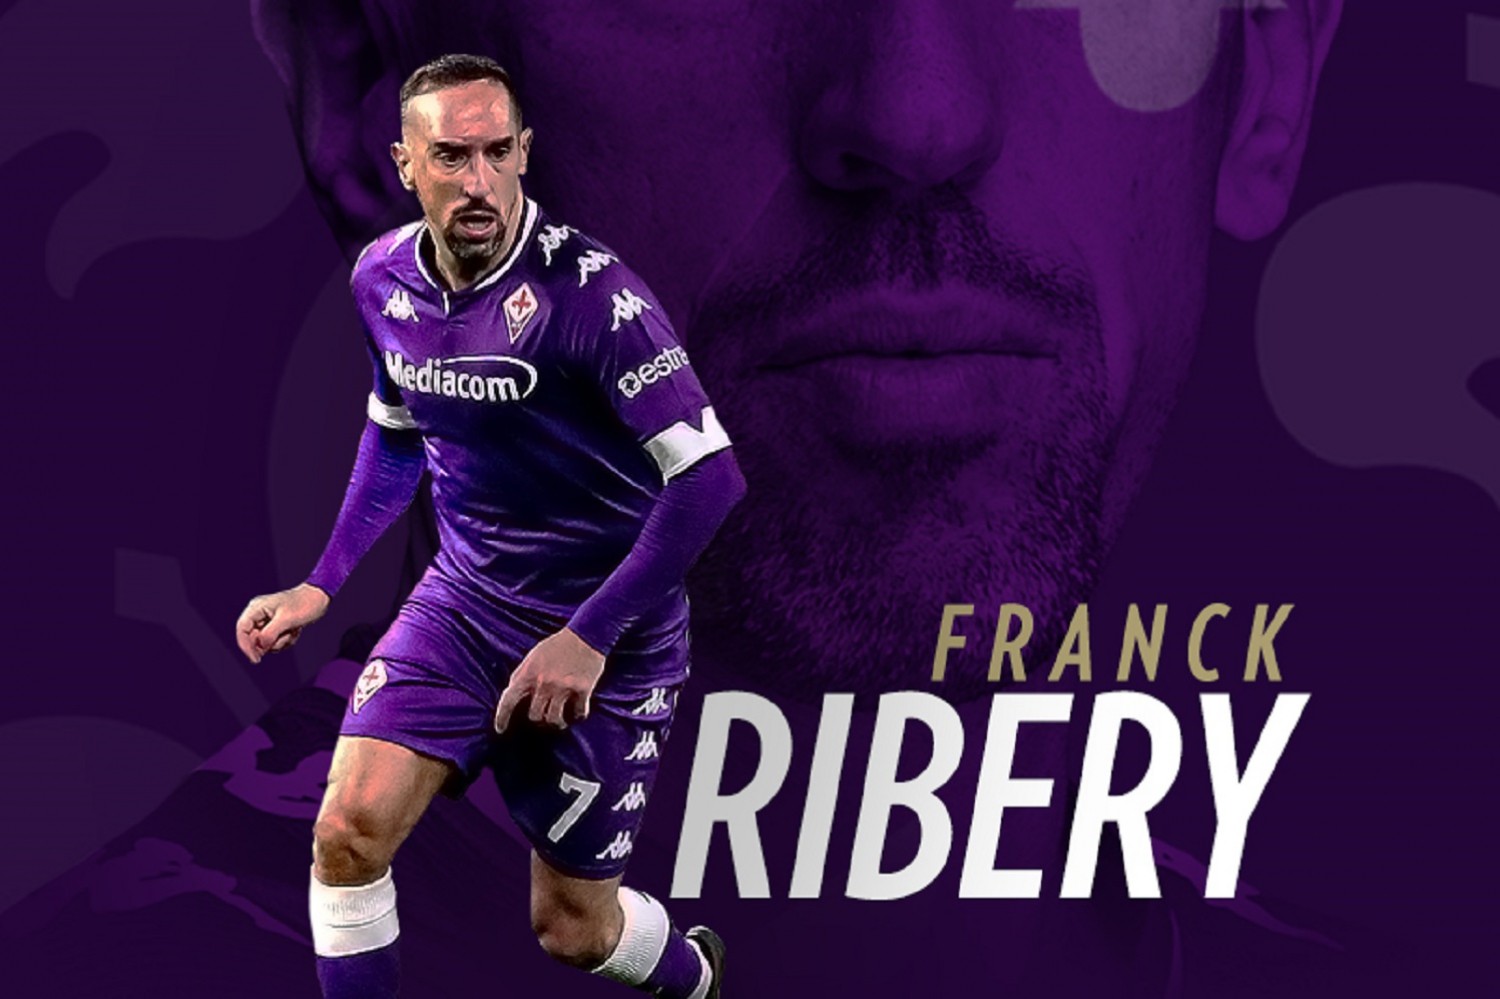 Franck Ribéry i Martín Cáceres odeszli z Fiorentiny [OFICJALNIE]